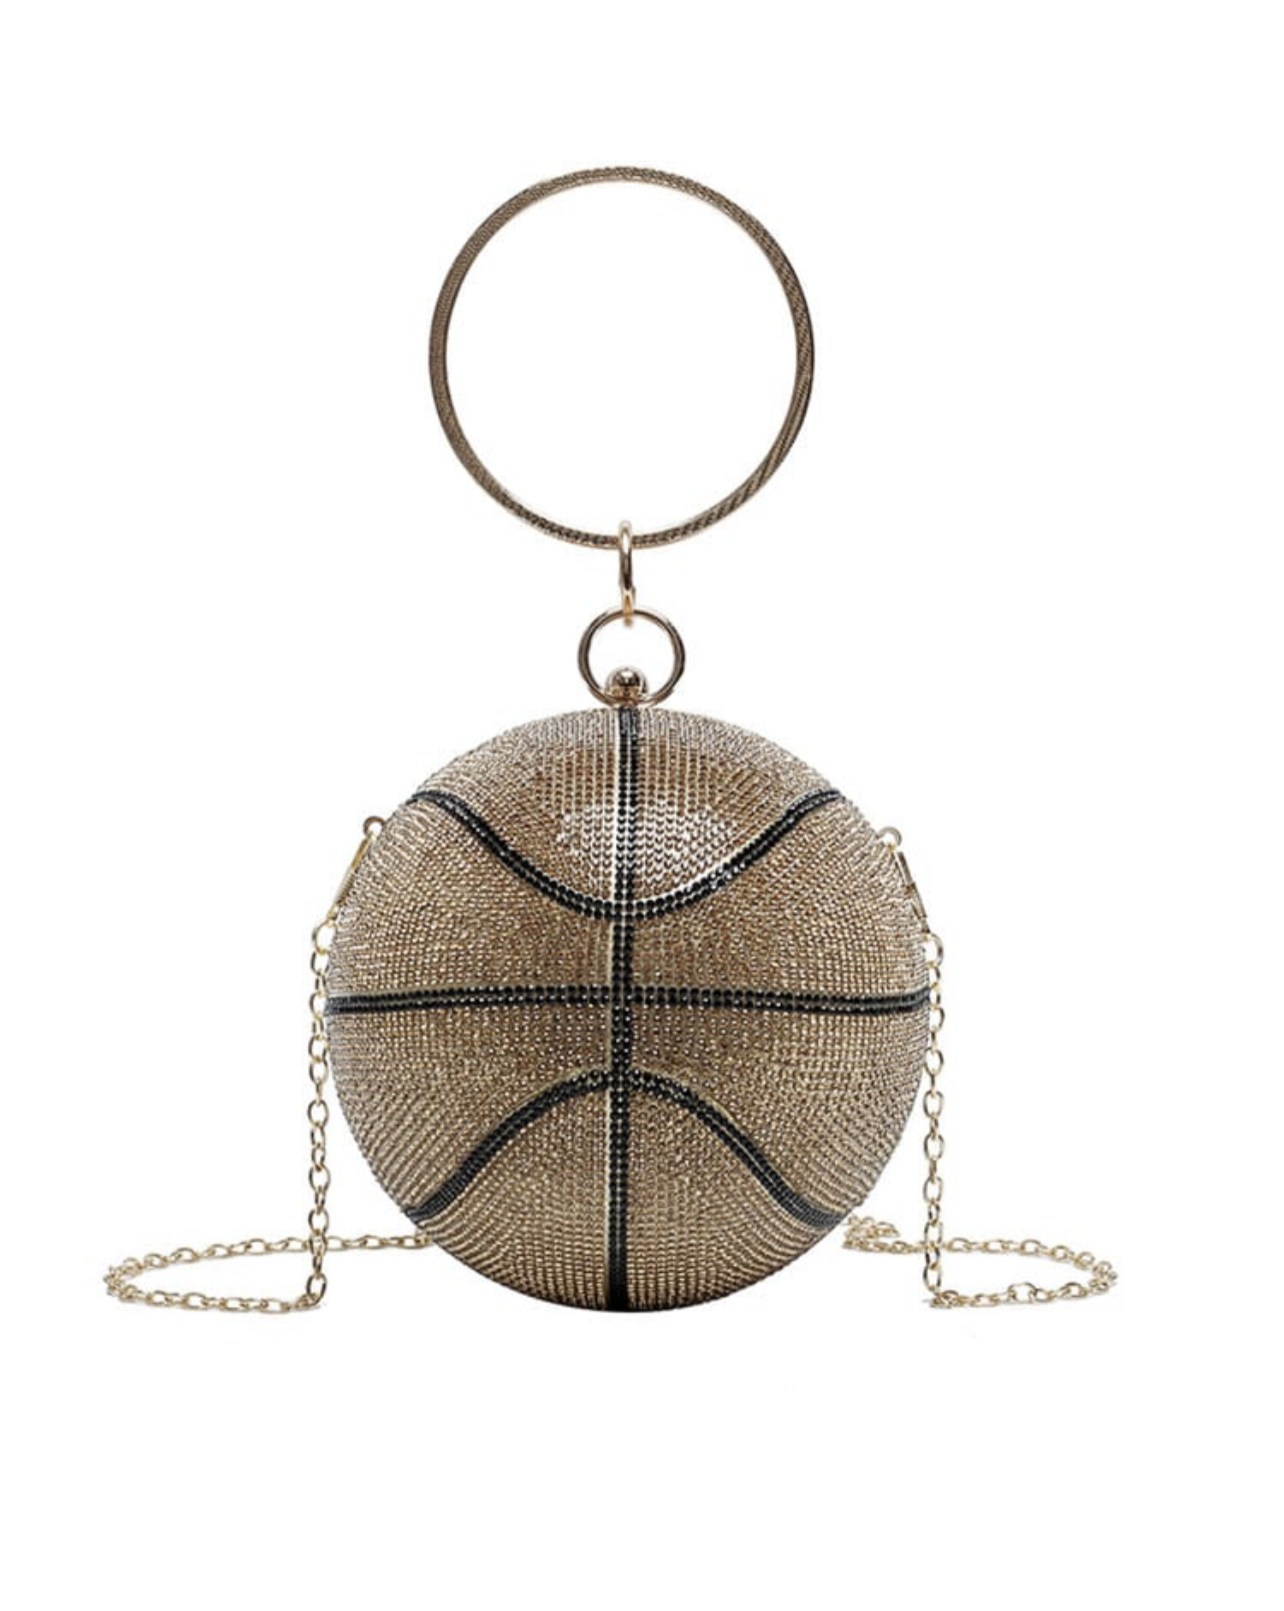 Rhinestone Basketball and soccer bag